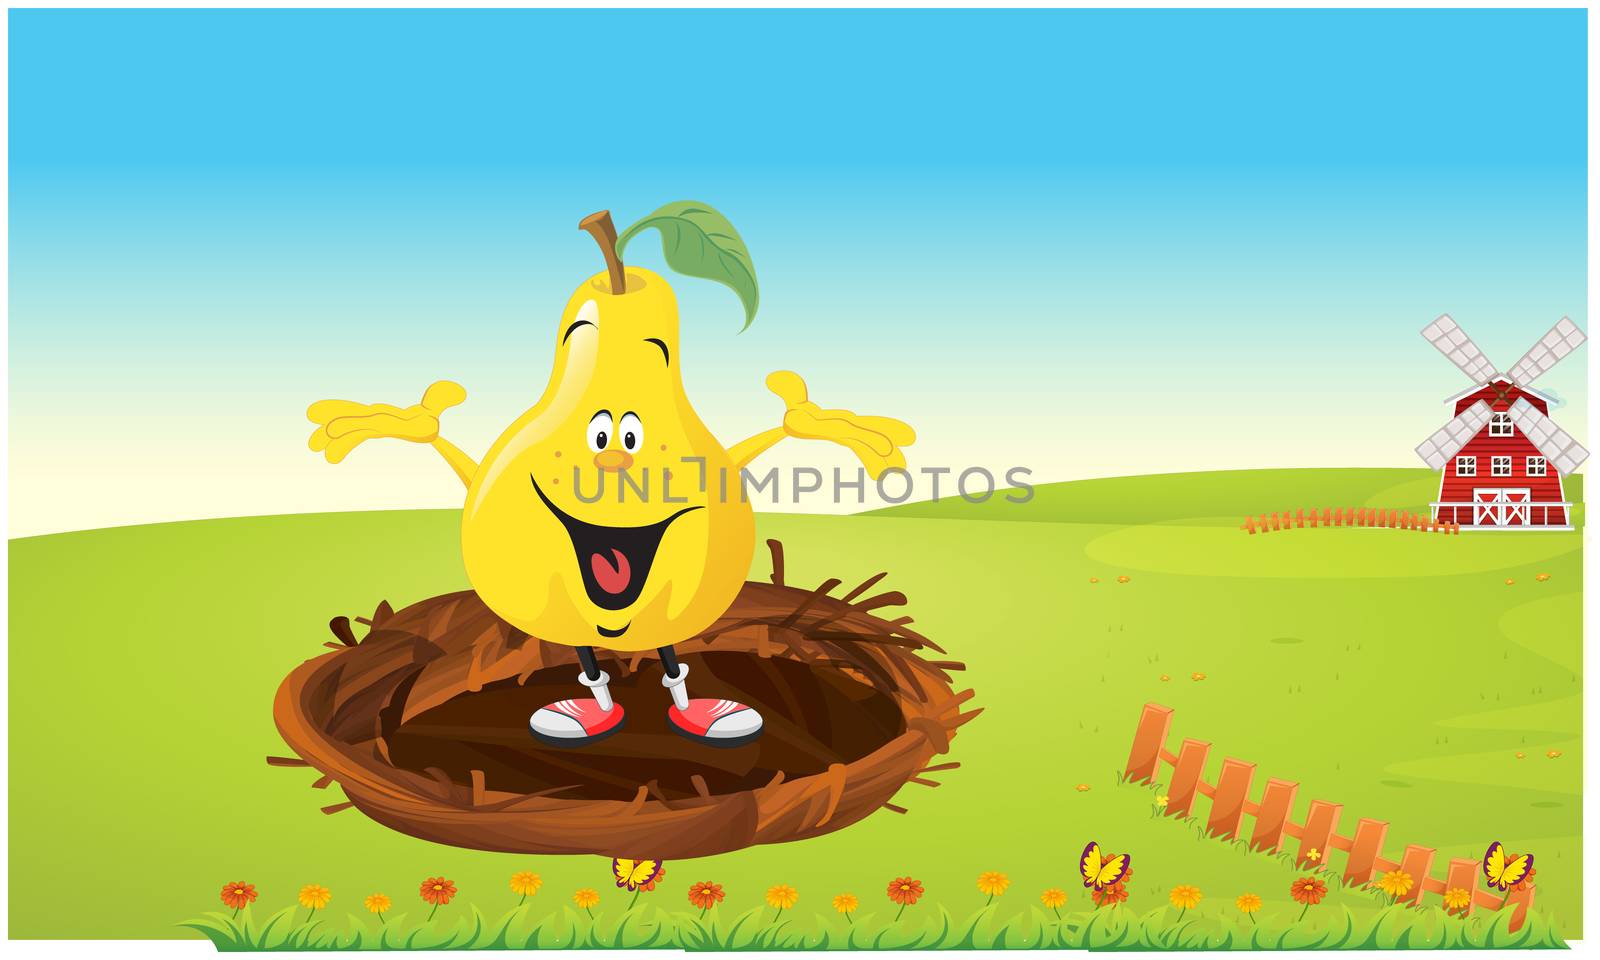 a fruit is dancing in a bird nest in the garden by aanavcreationsplus